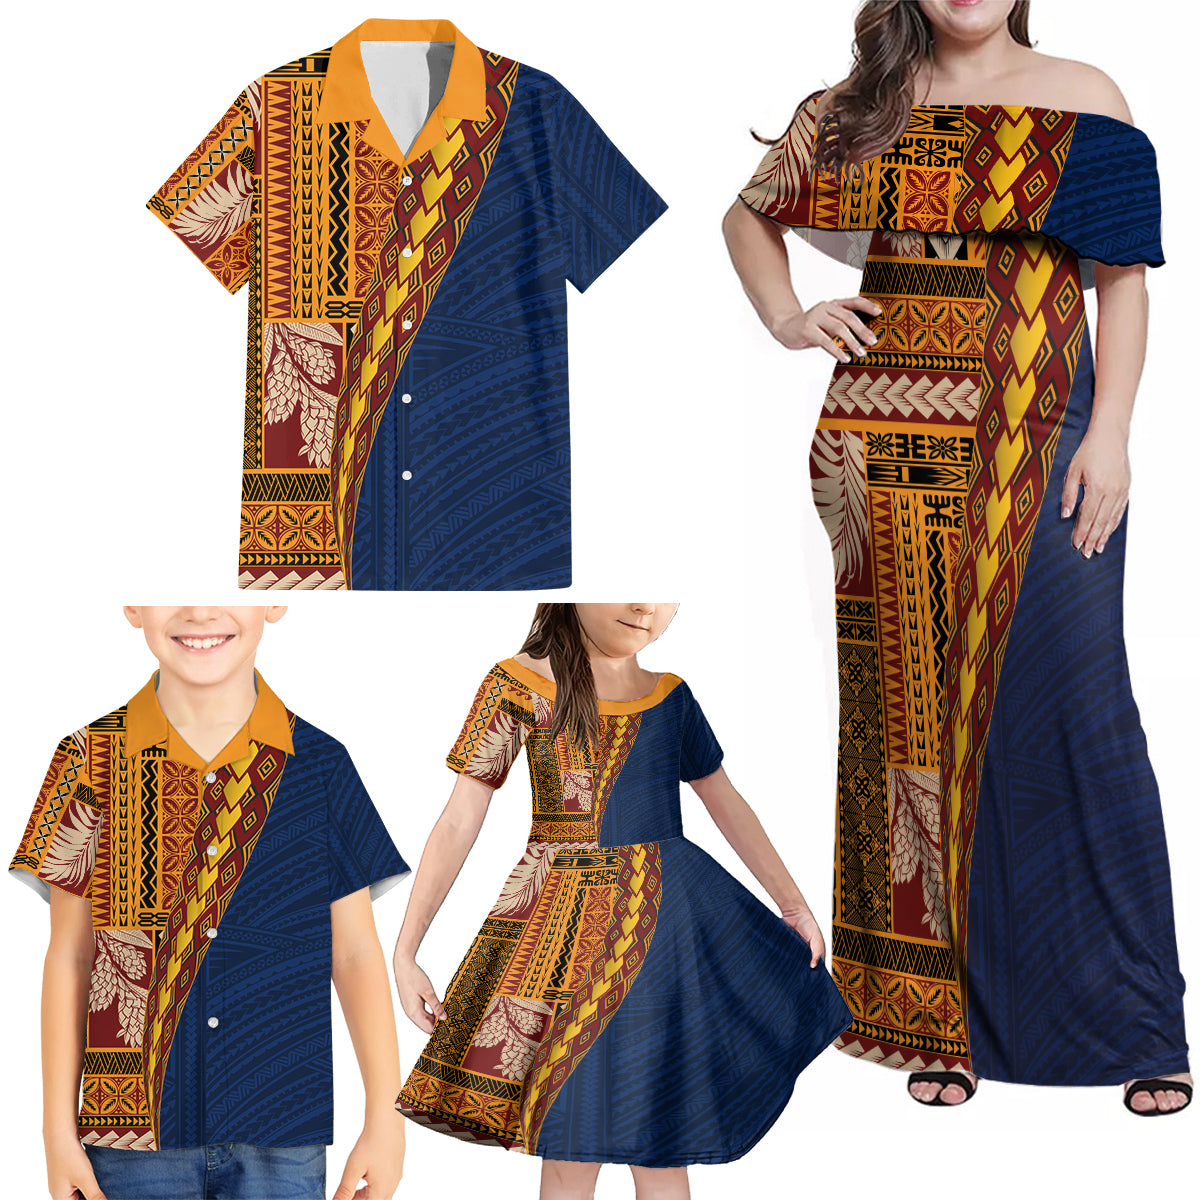 Samoa Siapo Motif Half Style Family Matching Off Shoulder Maxi Dress and Hawaiian Shirt Colorful Version